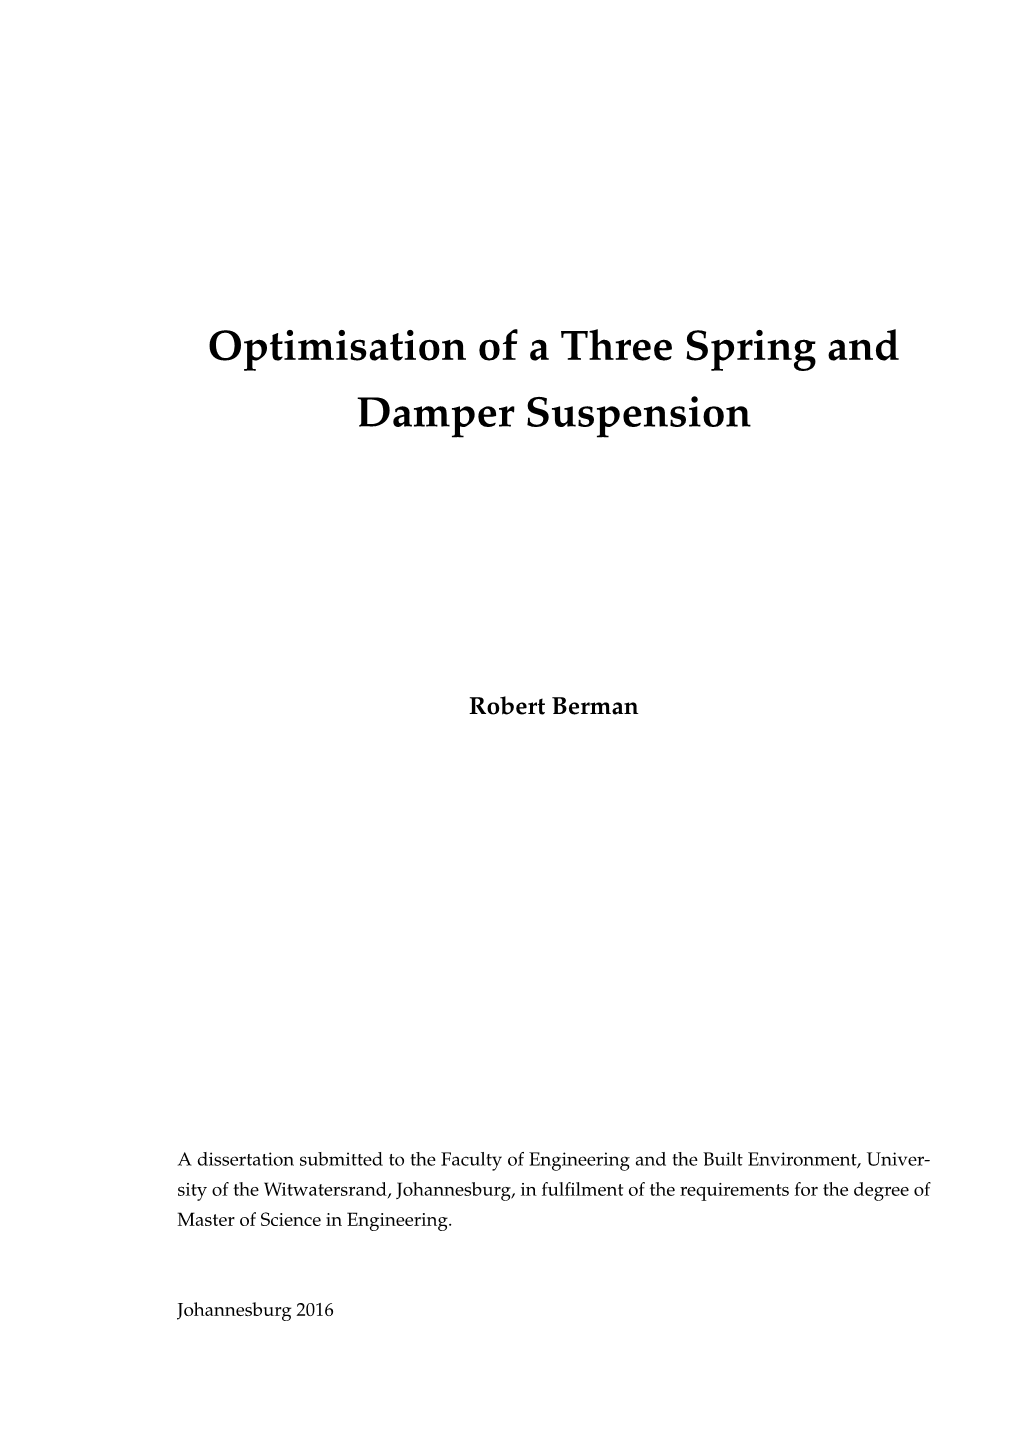 Optimisation of a Three Spring and Damper Suspension